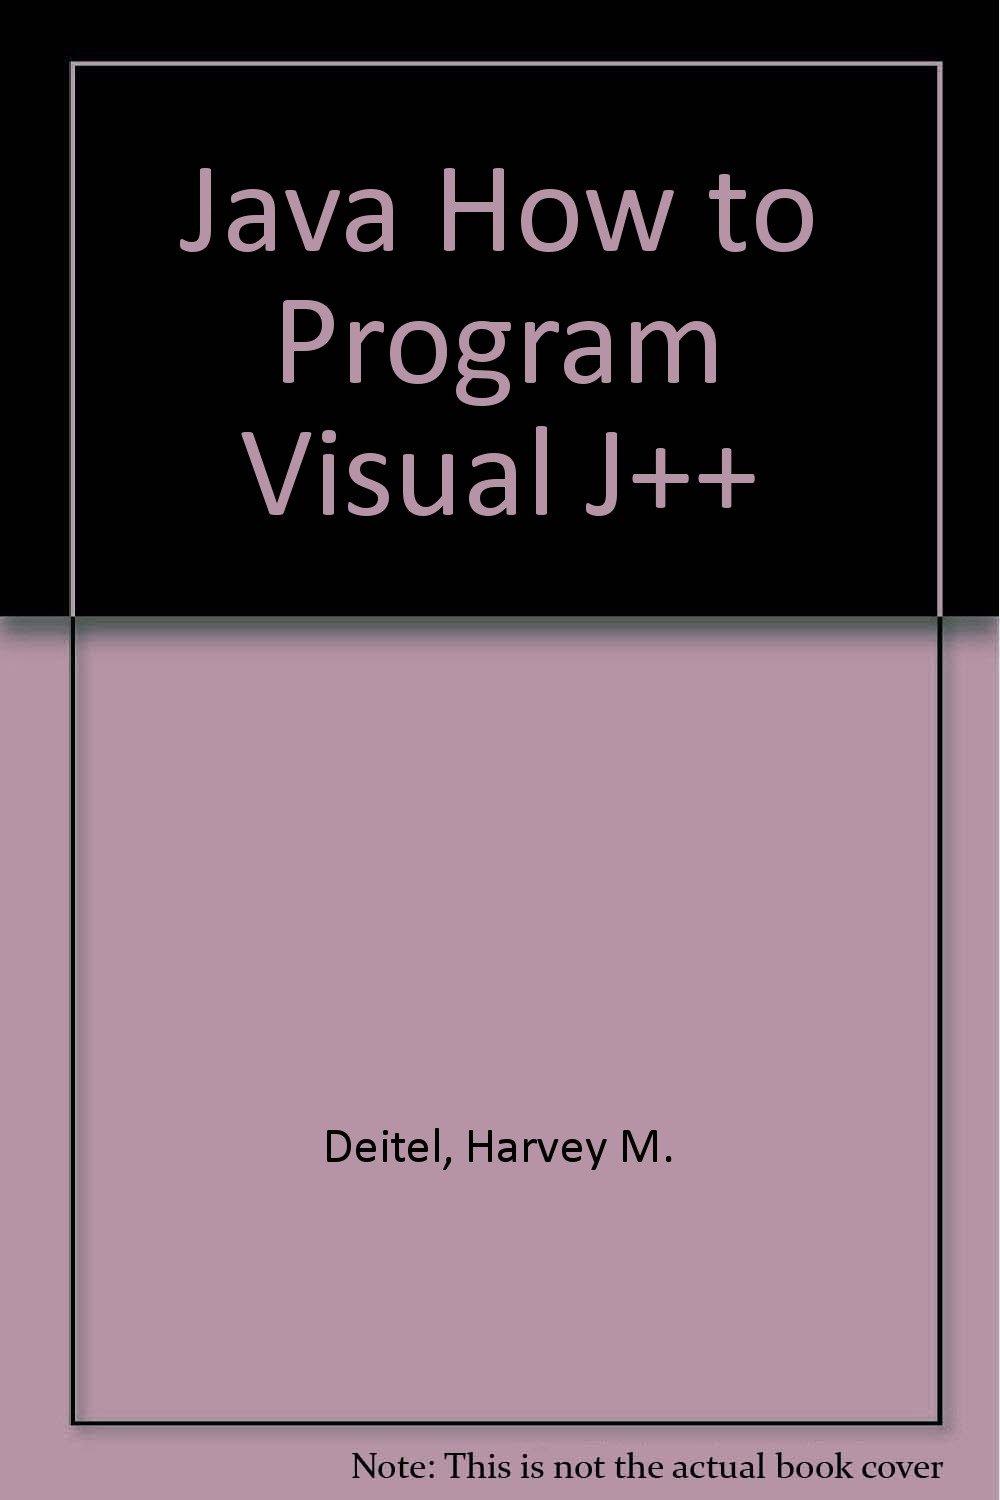 java how to program visual j++ with cd 2nd edition harvey m. deitel 0130105686, 978-0130105684